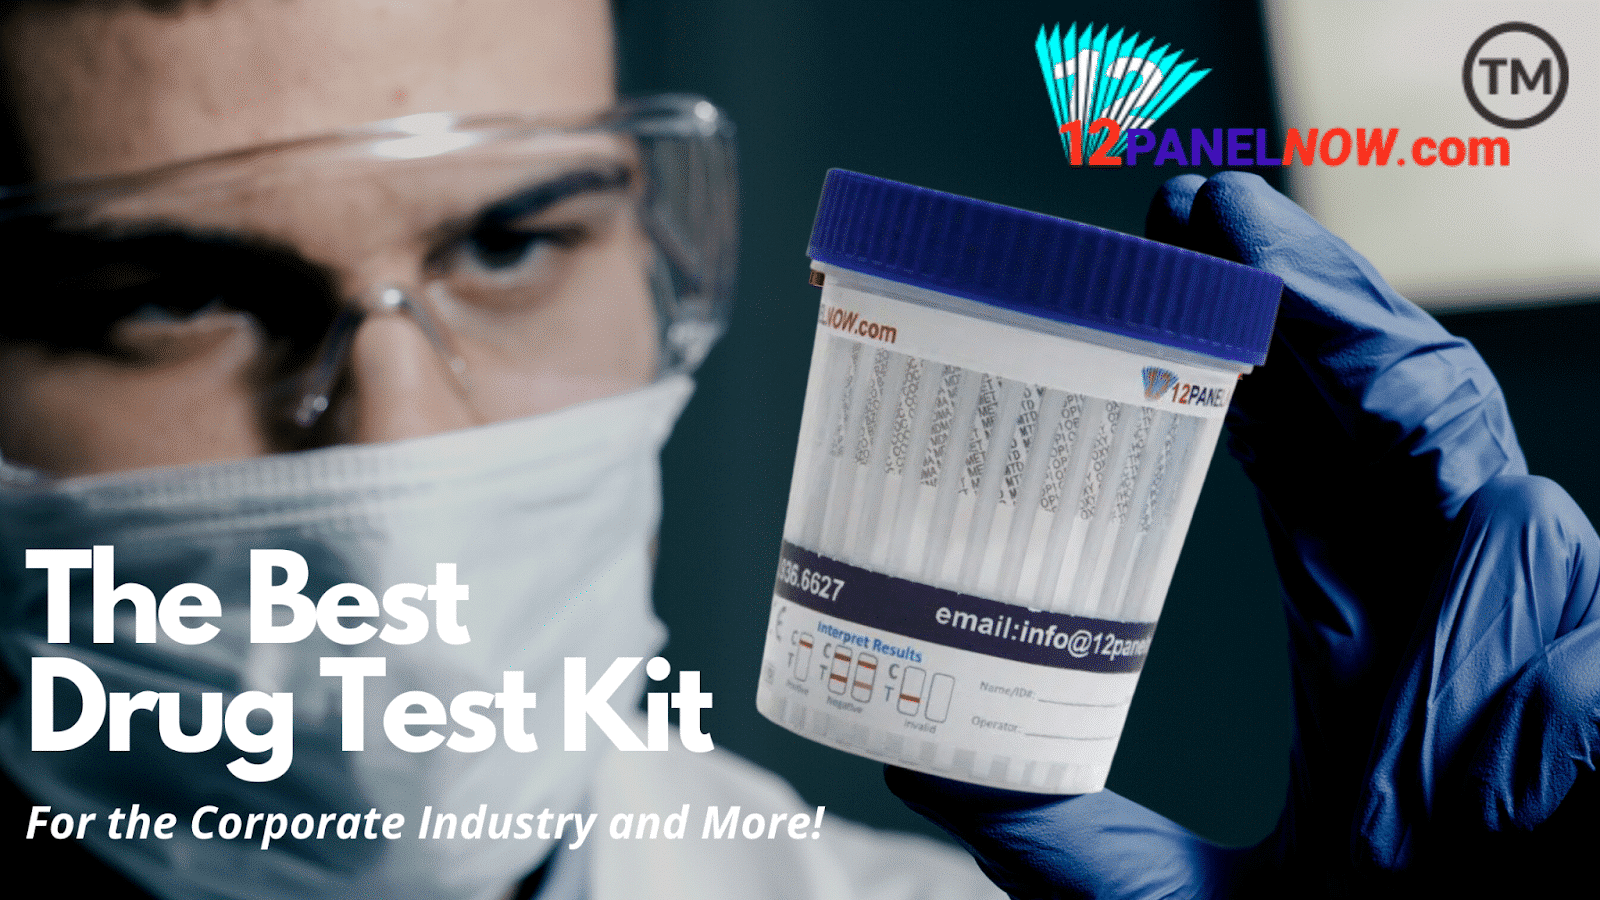 Where Can I Buy a Drug Test Kit?